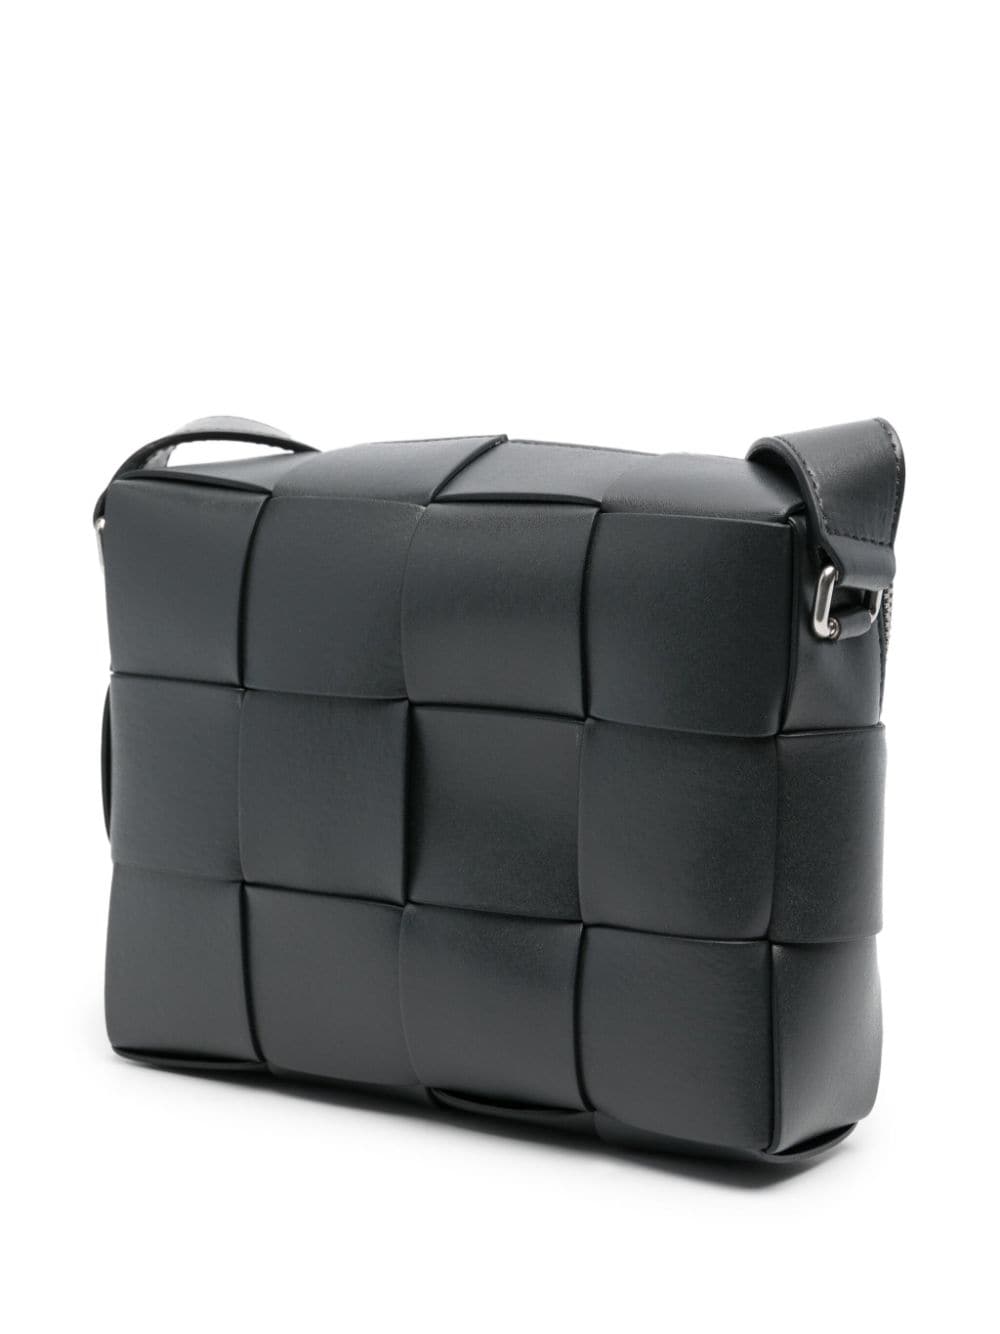 Bottega Veneta Intrecciato leather shoulder bag - Grijs